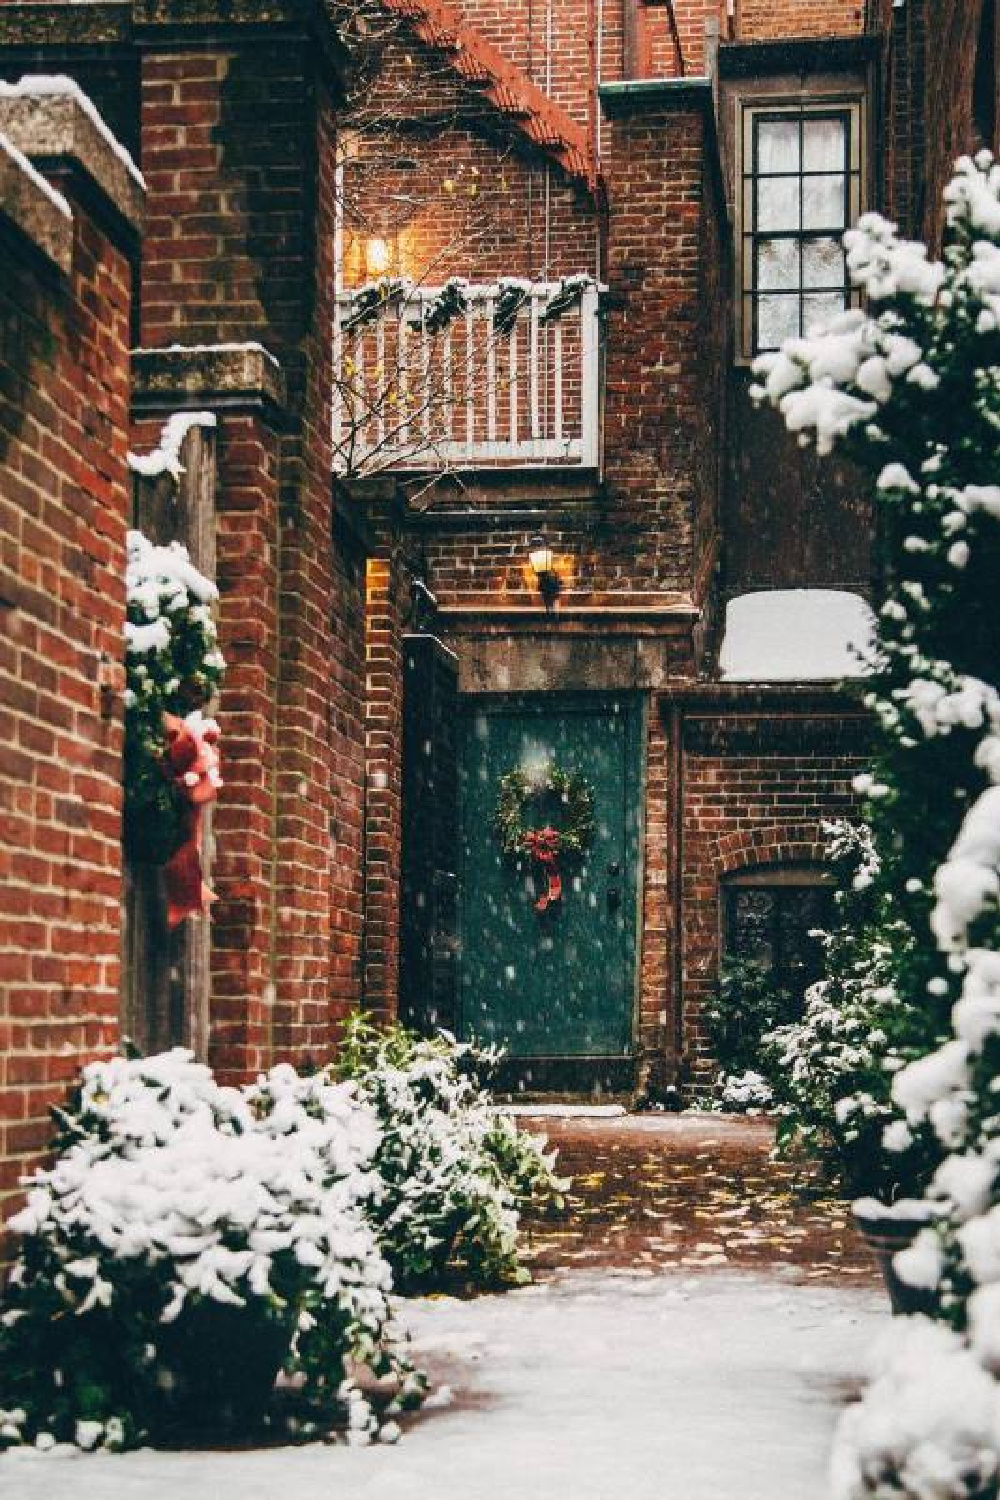 Cozy Christmas decorated exterior - Wintercozy on Tumblr. #christmascozy